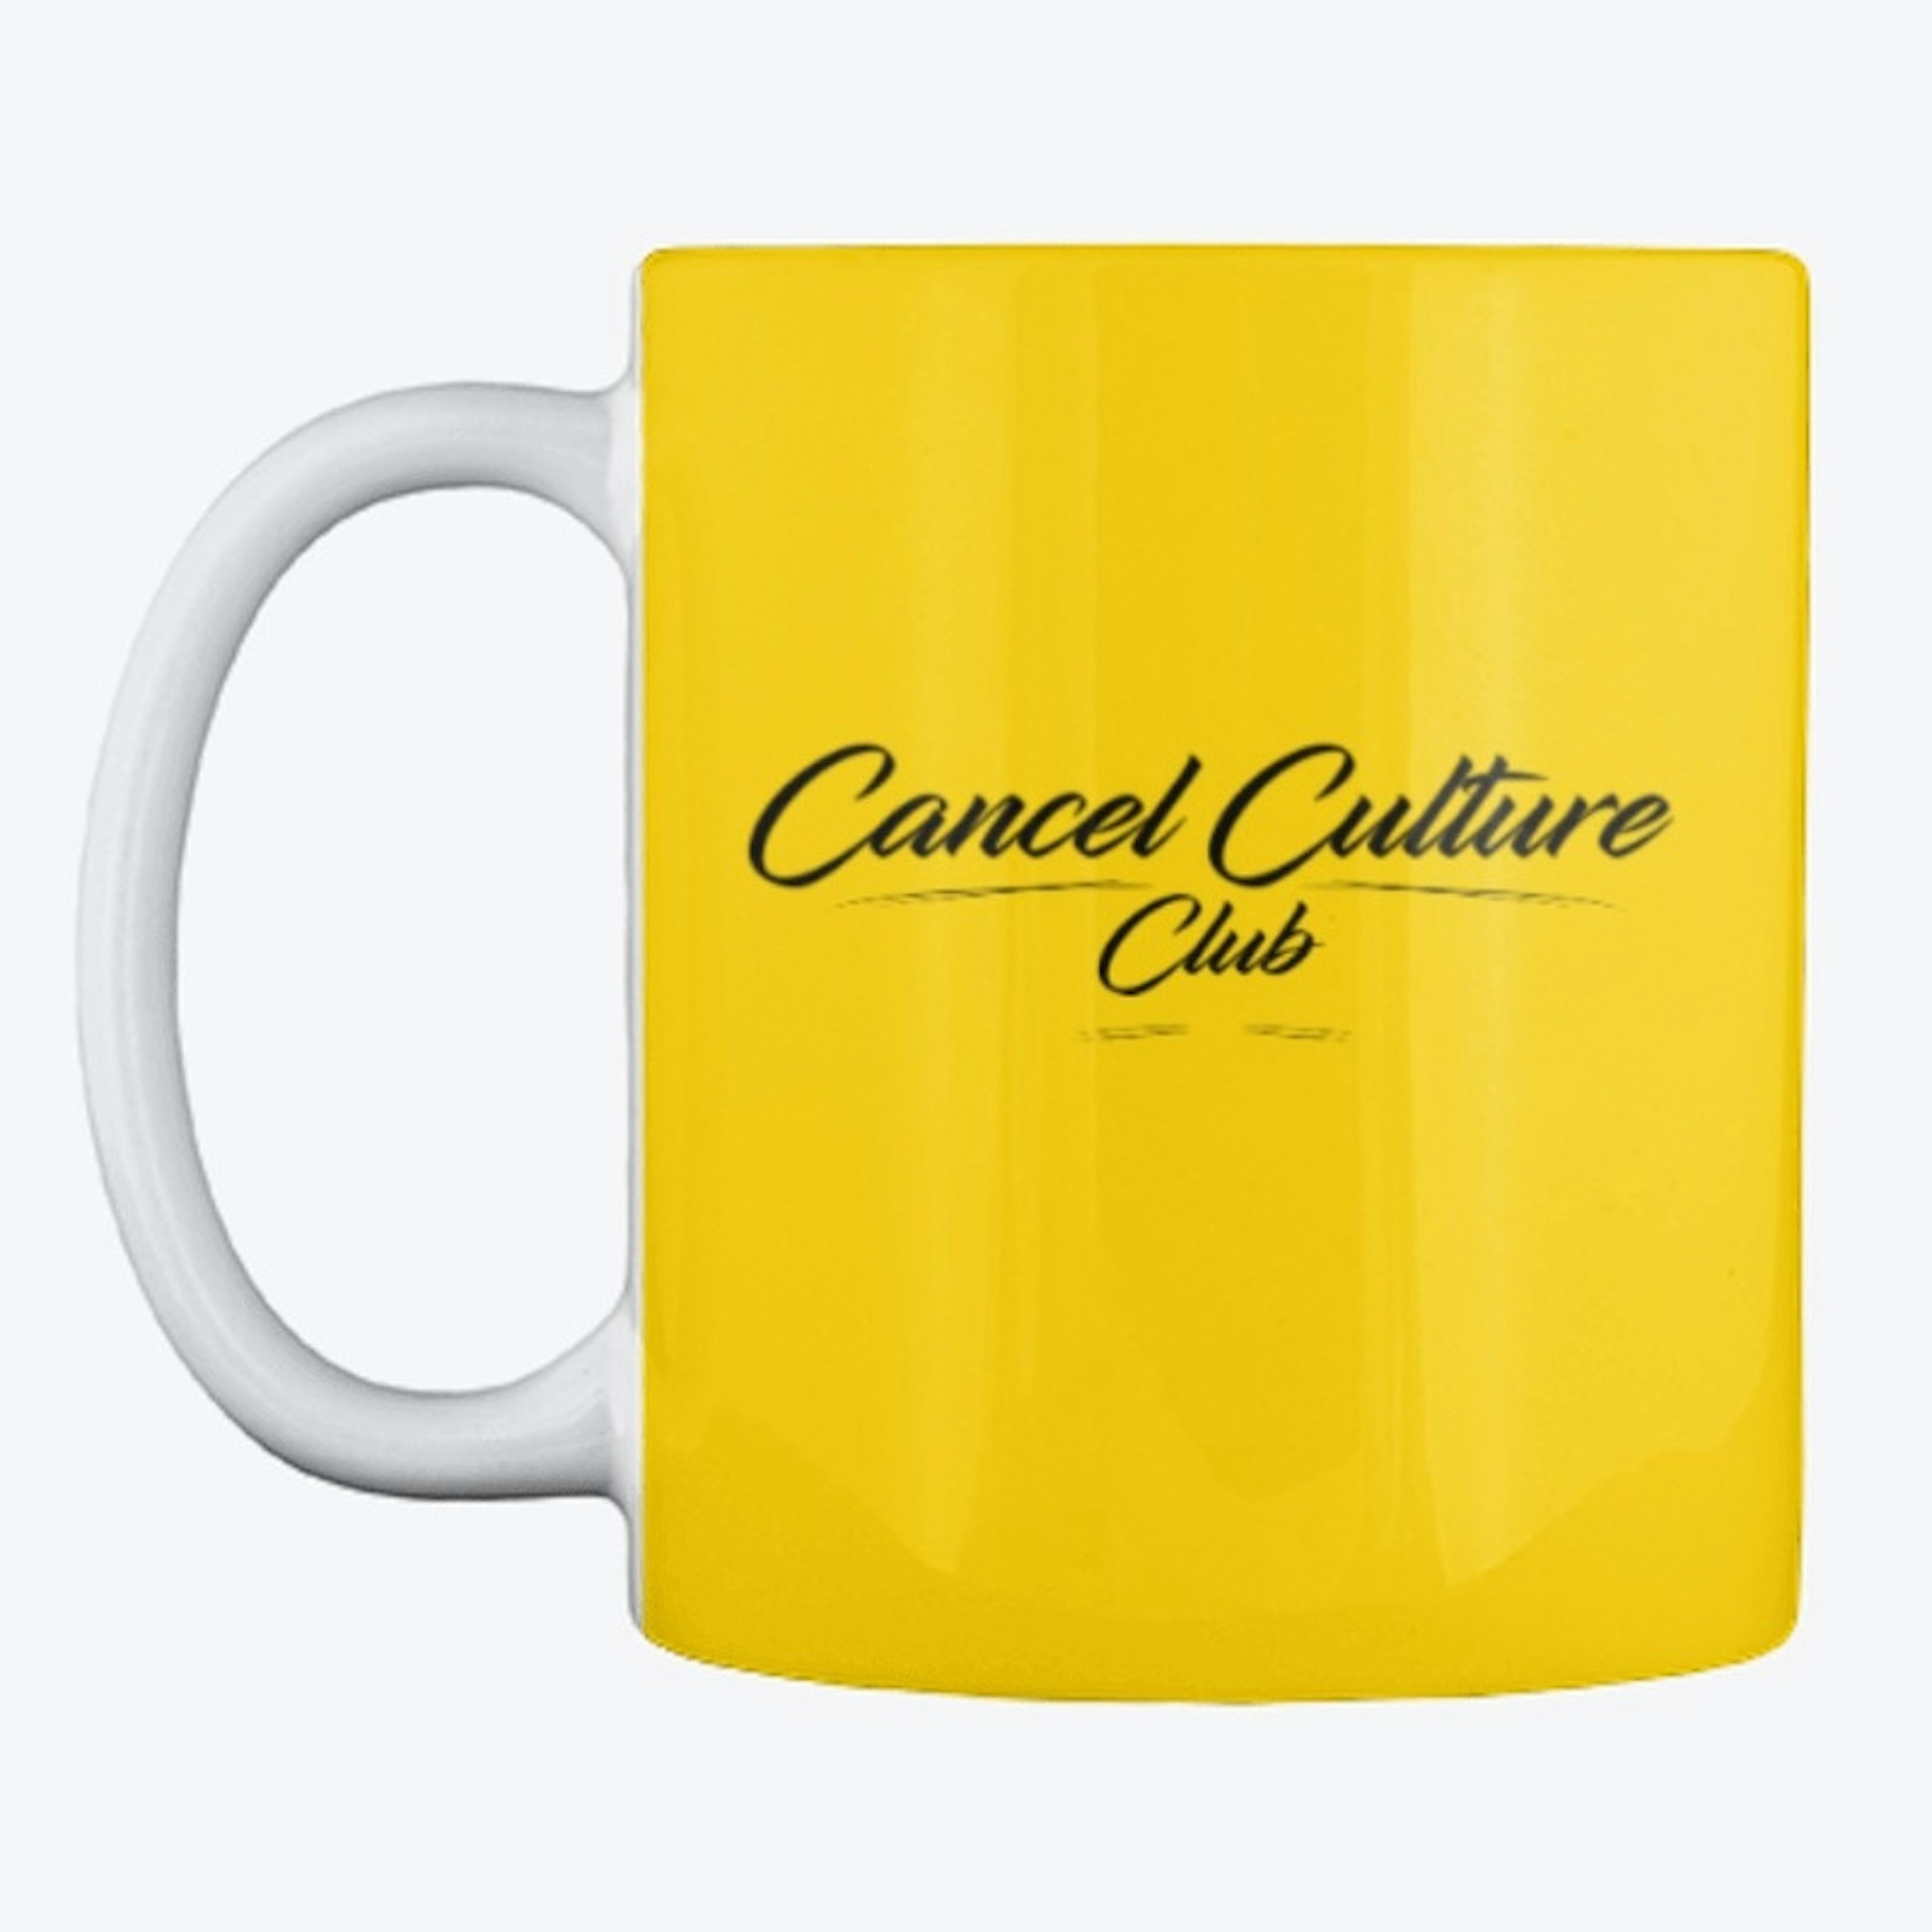 Cancel Culture Club